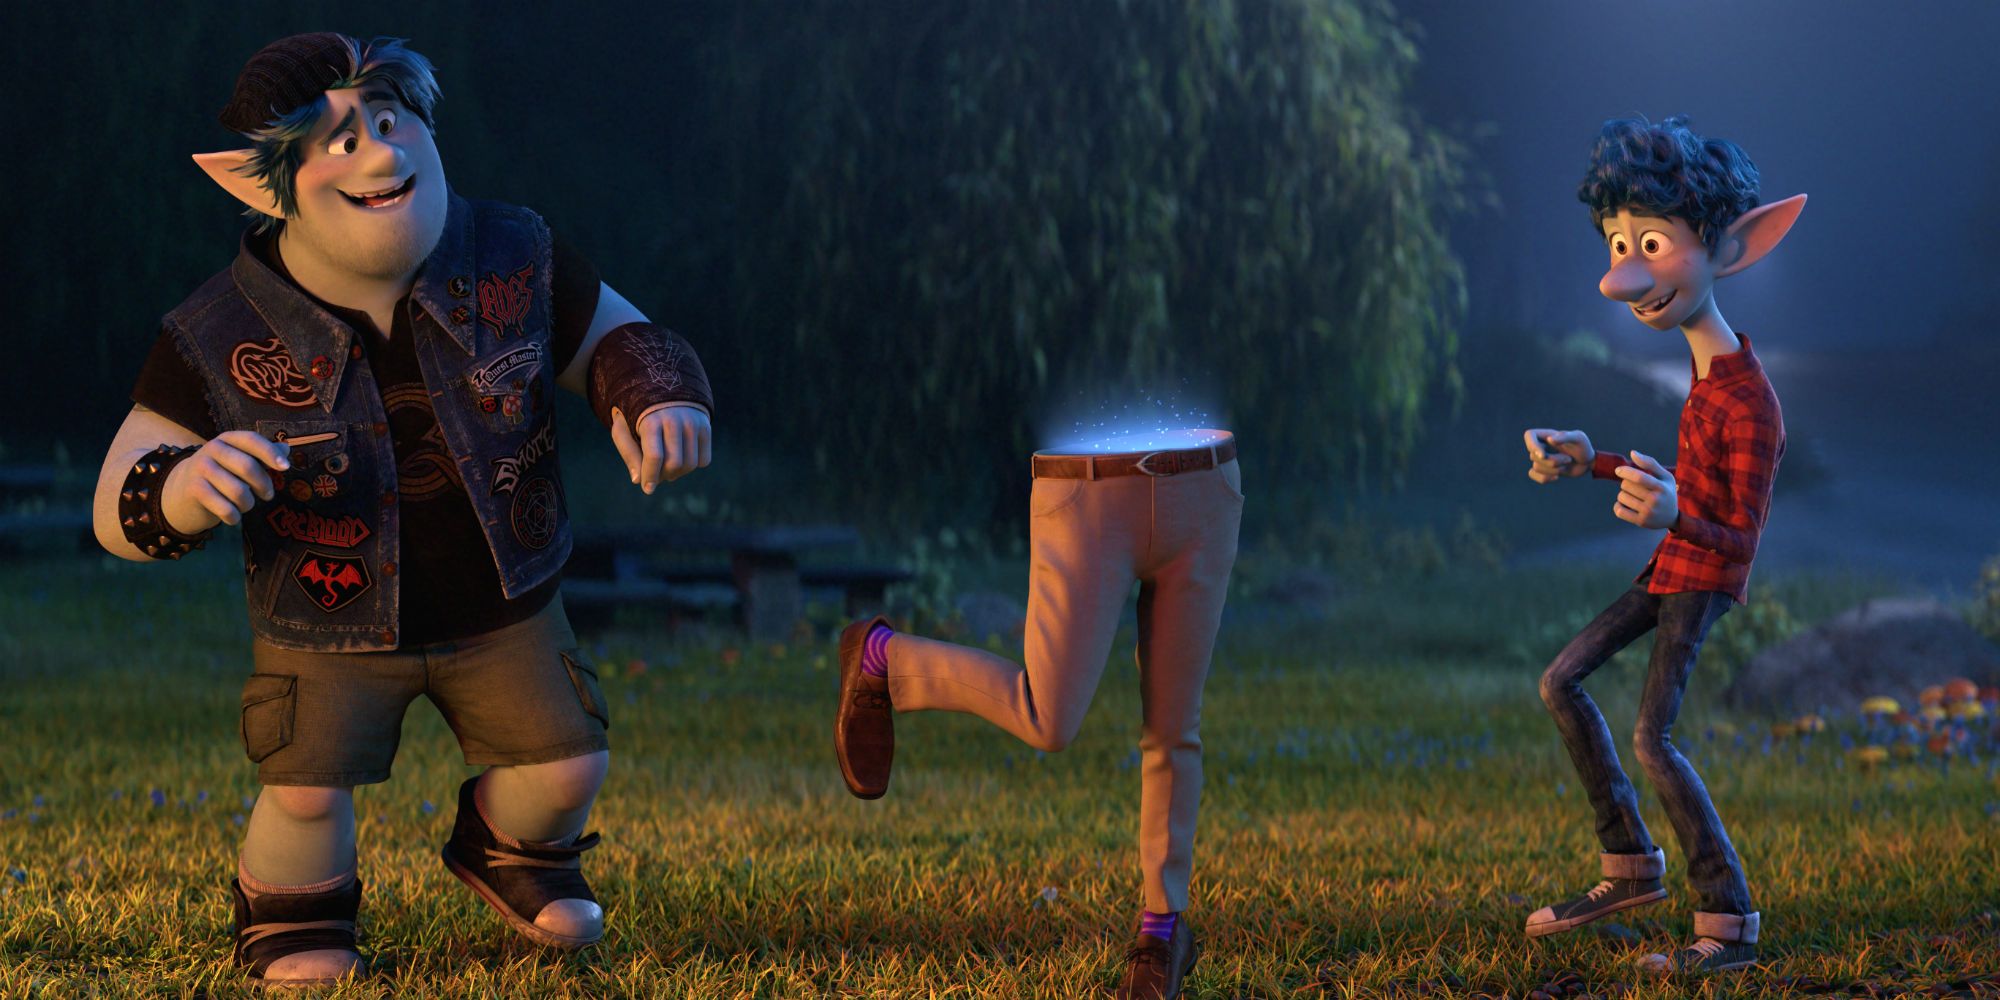 Chris Pratt as Barley and Tom Holland as Ian from Pixar Onward